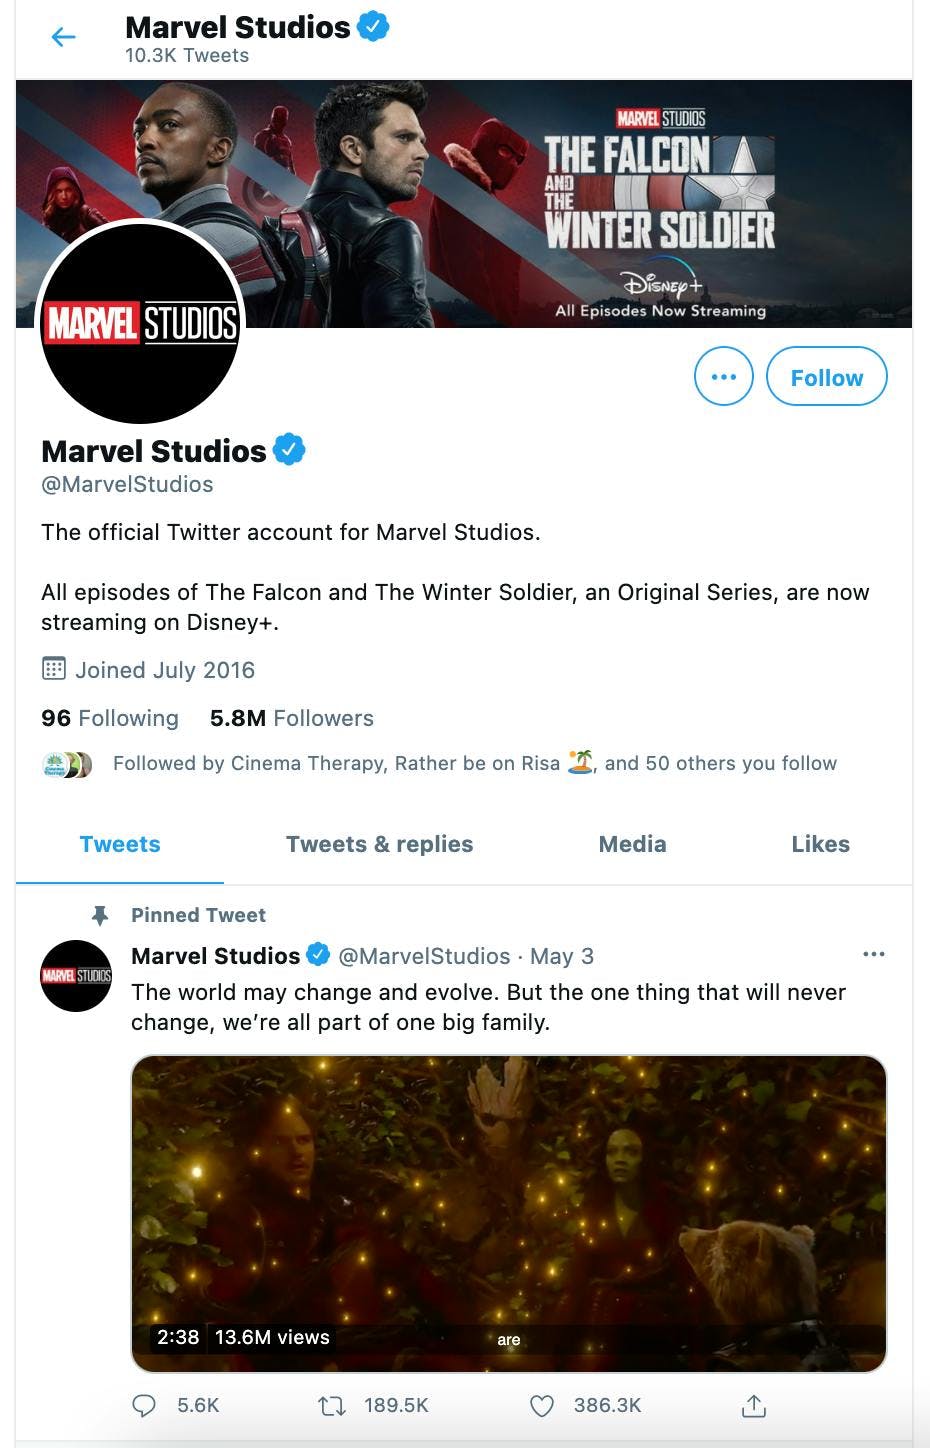 Marvel Twitter account showing pinned Tweet 